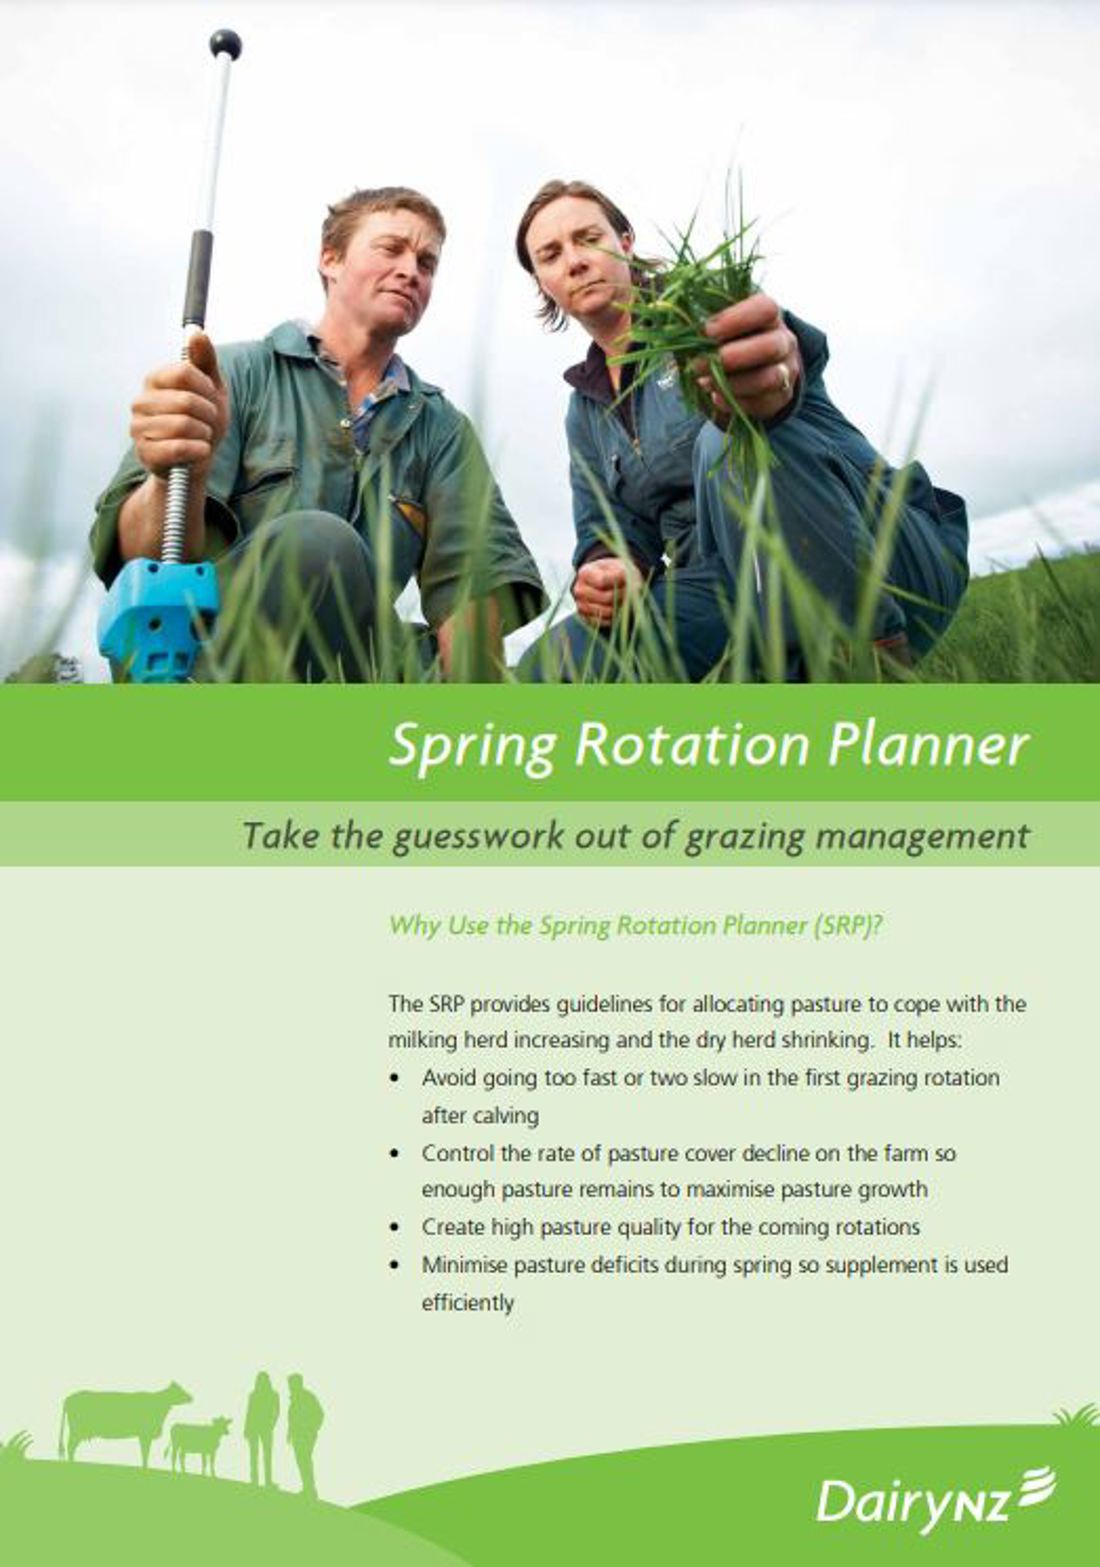 Spring Rotation Planner Image